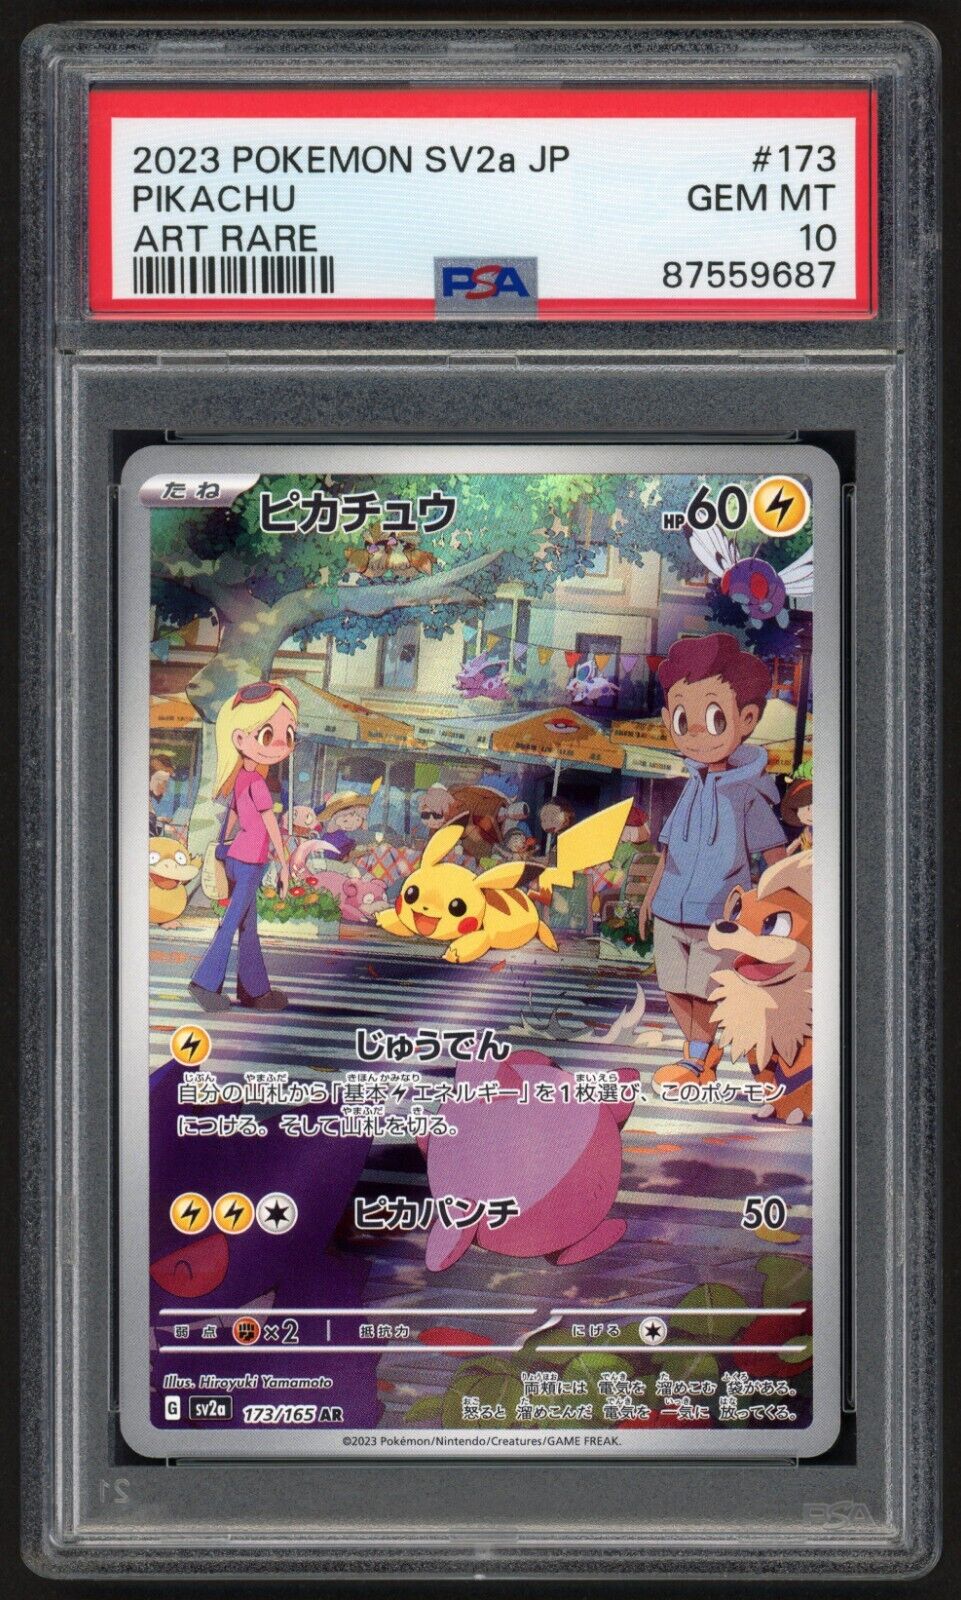 Pikachu Art Rare 173/165 Pokemon 151 JPN SV2a 2023 GEM MINT PSA 10